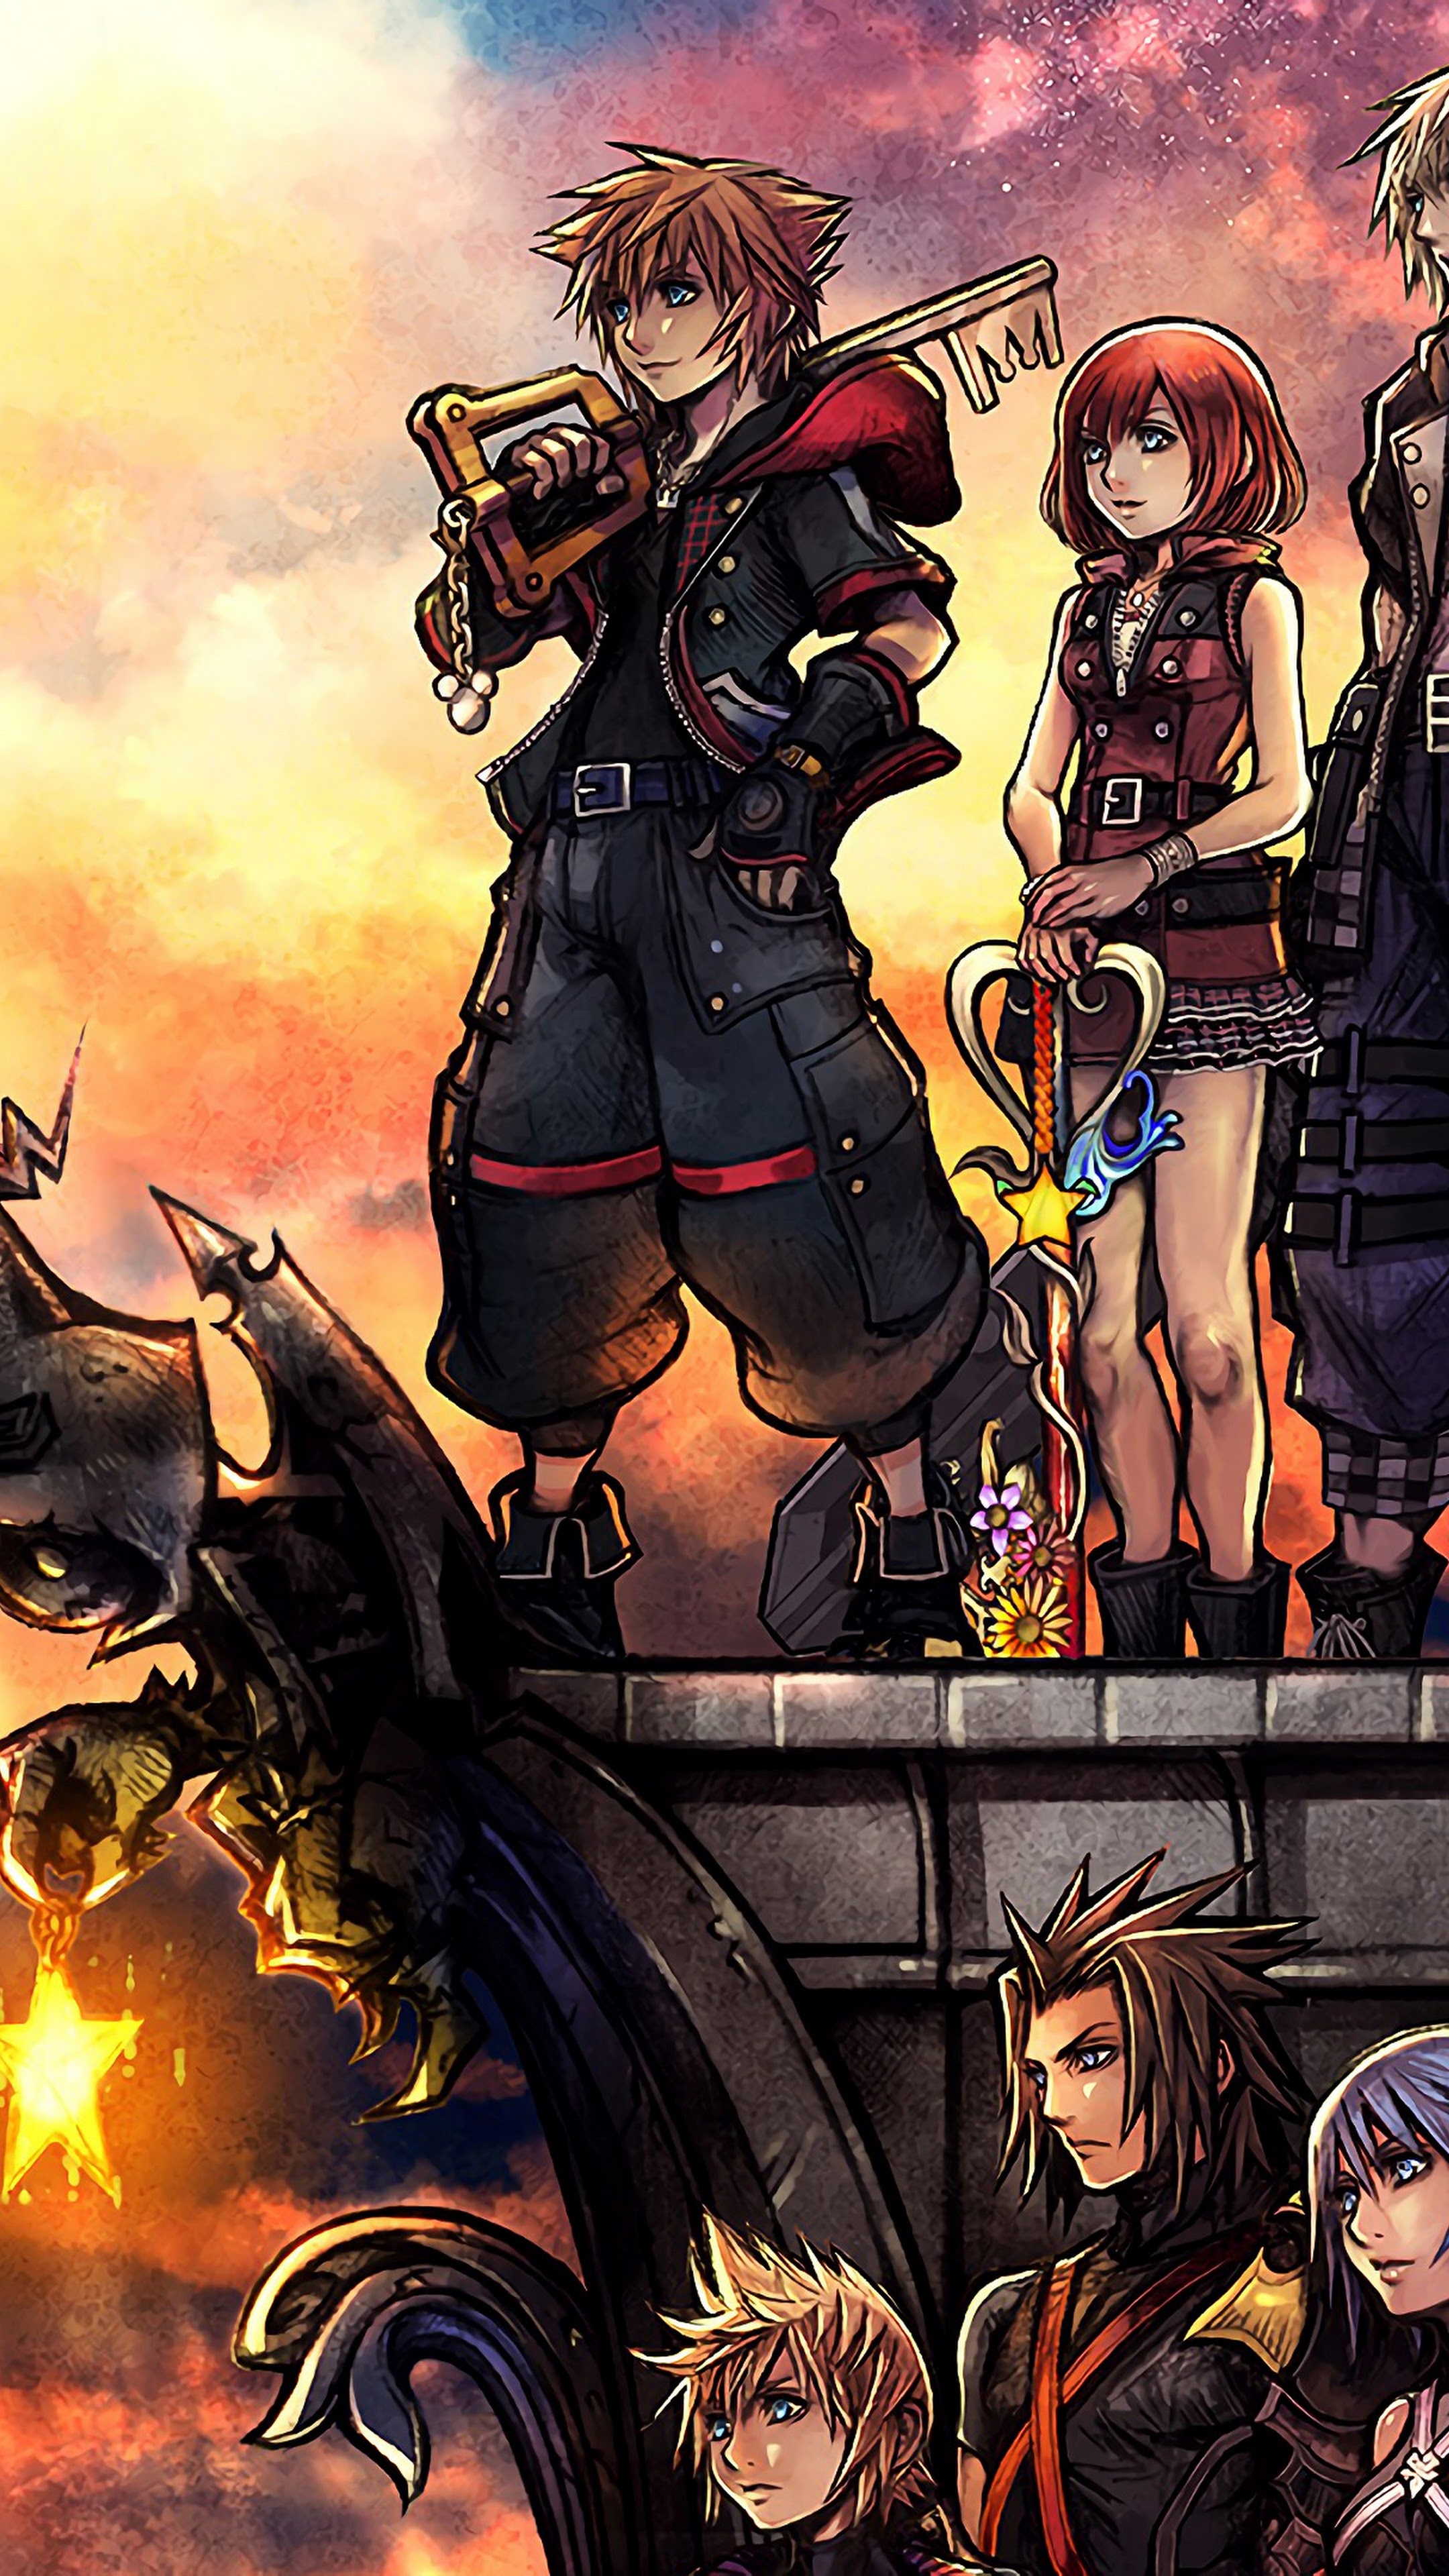 Kingdom Hearts 3 characters, 4K wallpaper, Epic battles, Heart-shaped worlds, 2160x3840 4K Phone